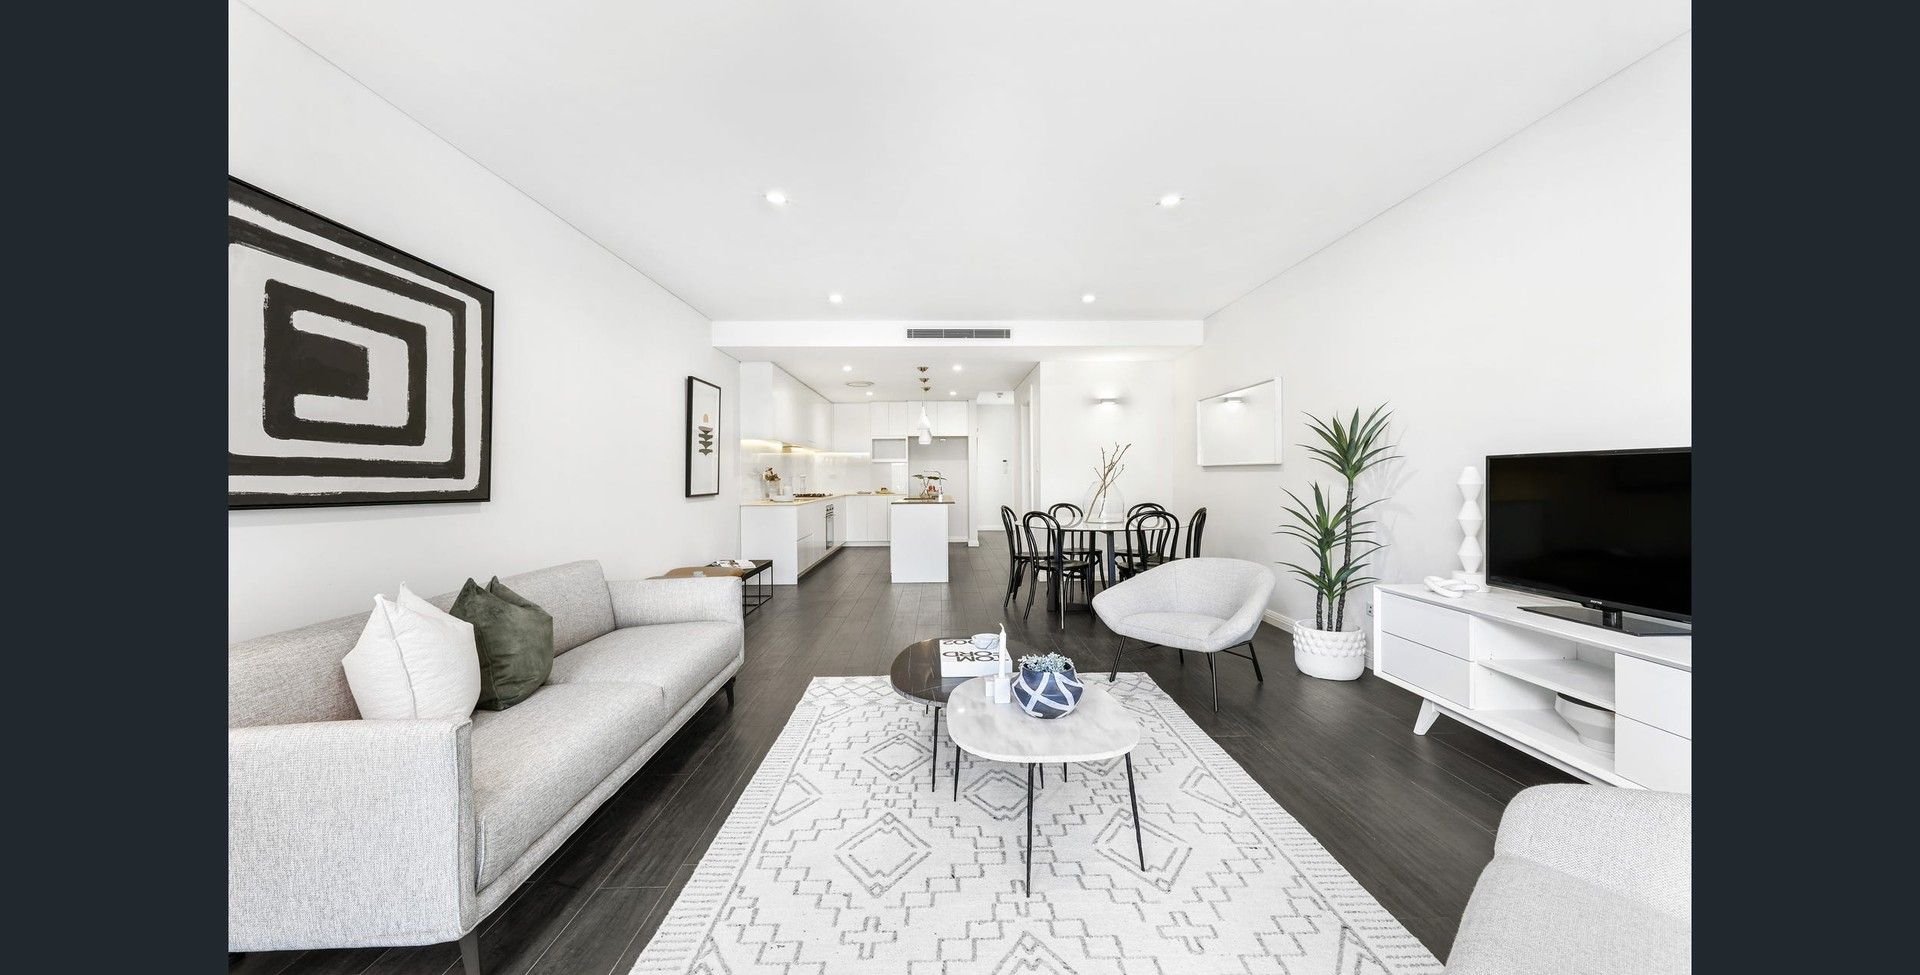 4 bedrooms Terrace in 45 Grove Street ST PETERS NSW, 2044